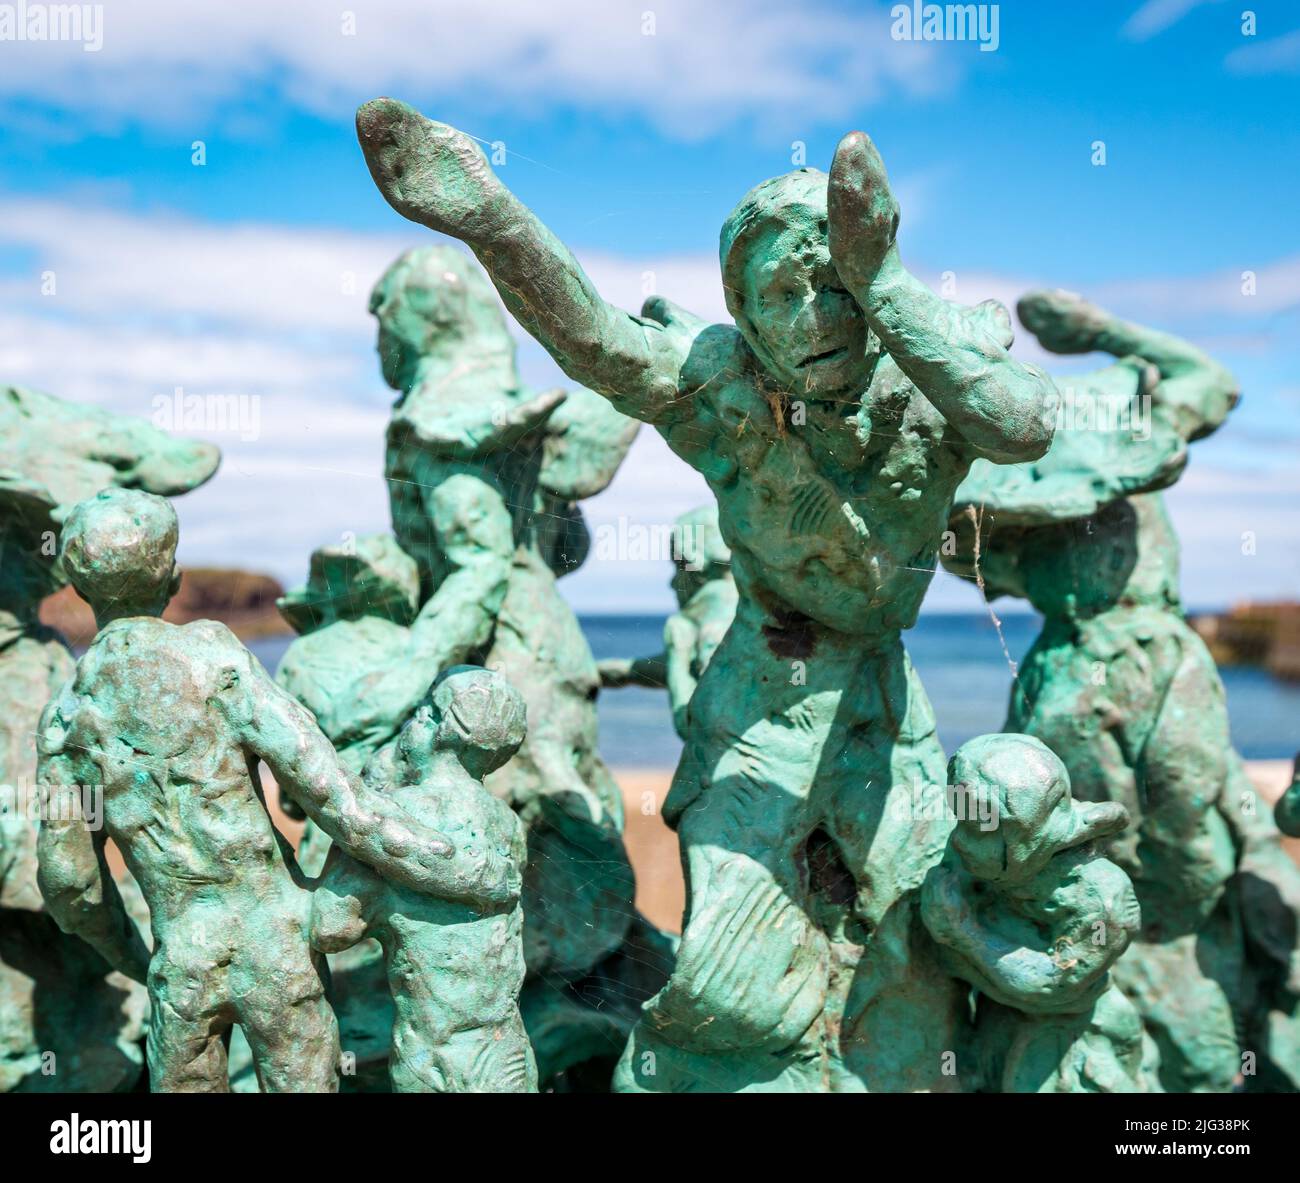 Fishing disaster memorial statue of miniature figures of widows and children by Jill Watson, Eyemouth, Berwickshire, Scotland, UK Stock Photo